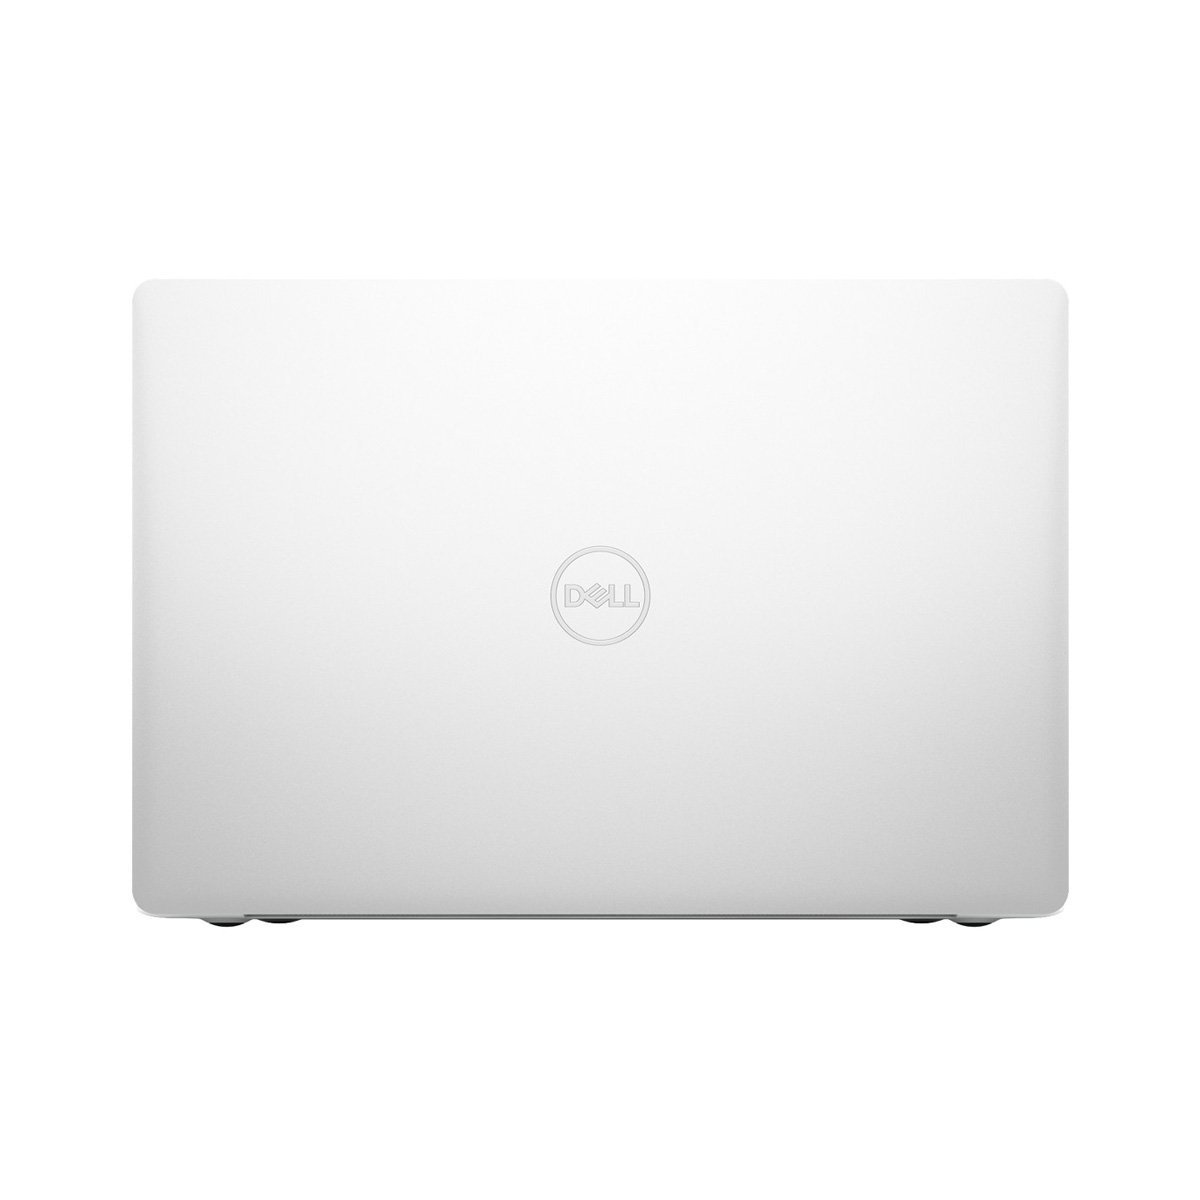 Laptop Inspiron 15-5570 Ci3 Optane Dell